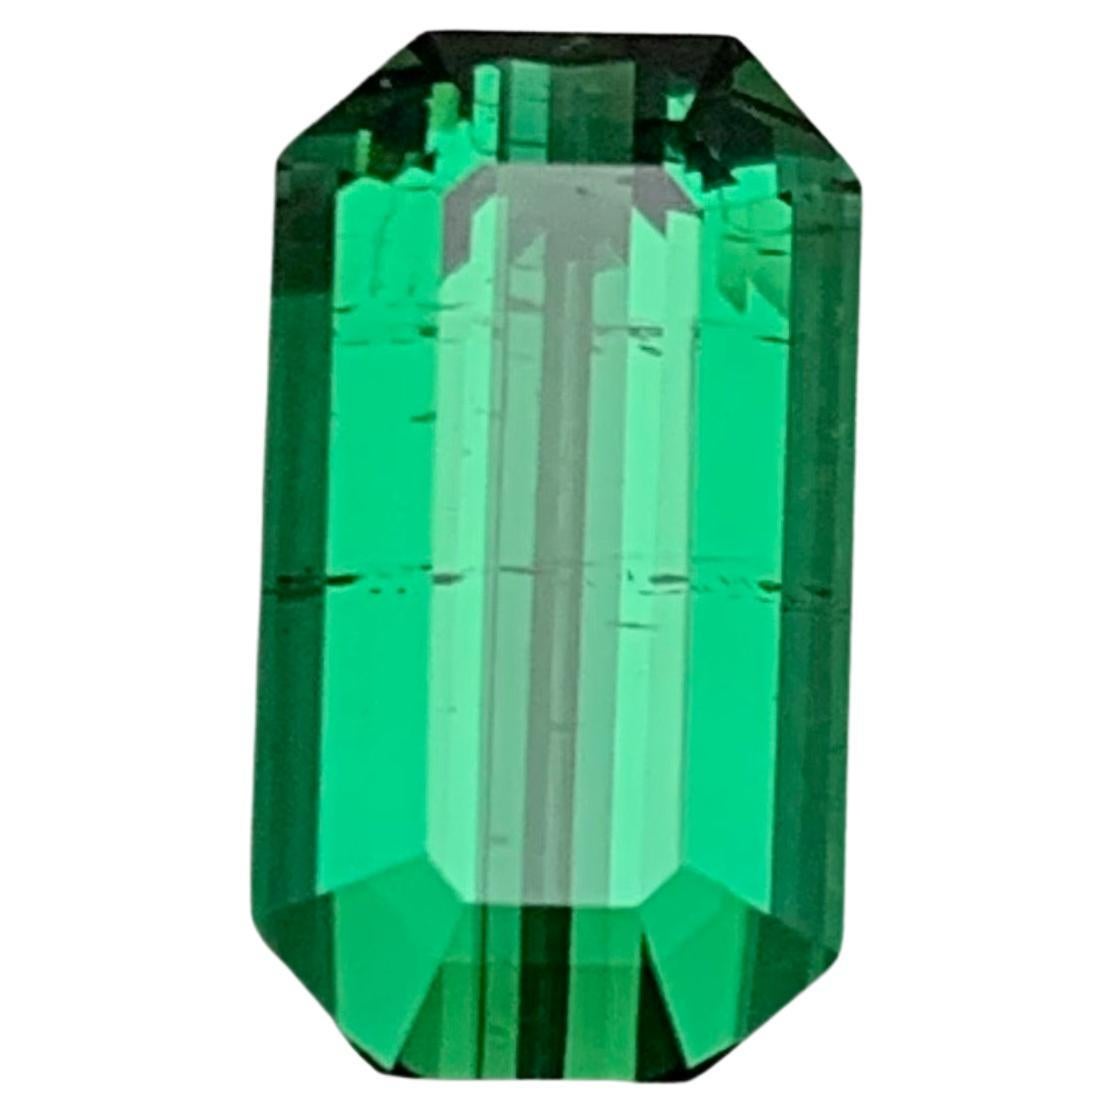 Rare Green Natural Tourmaline Gemstone, 3.85 Carat Emerald Cut for Ring/Pendant